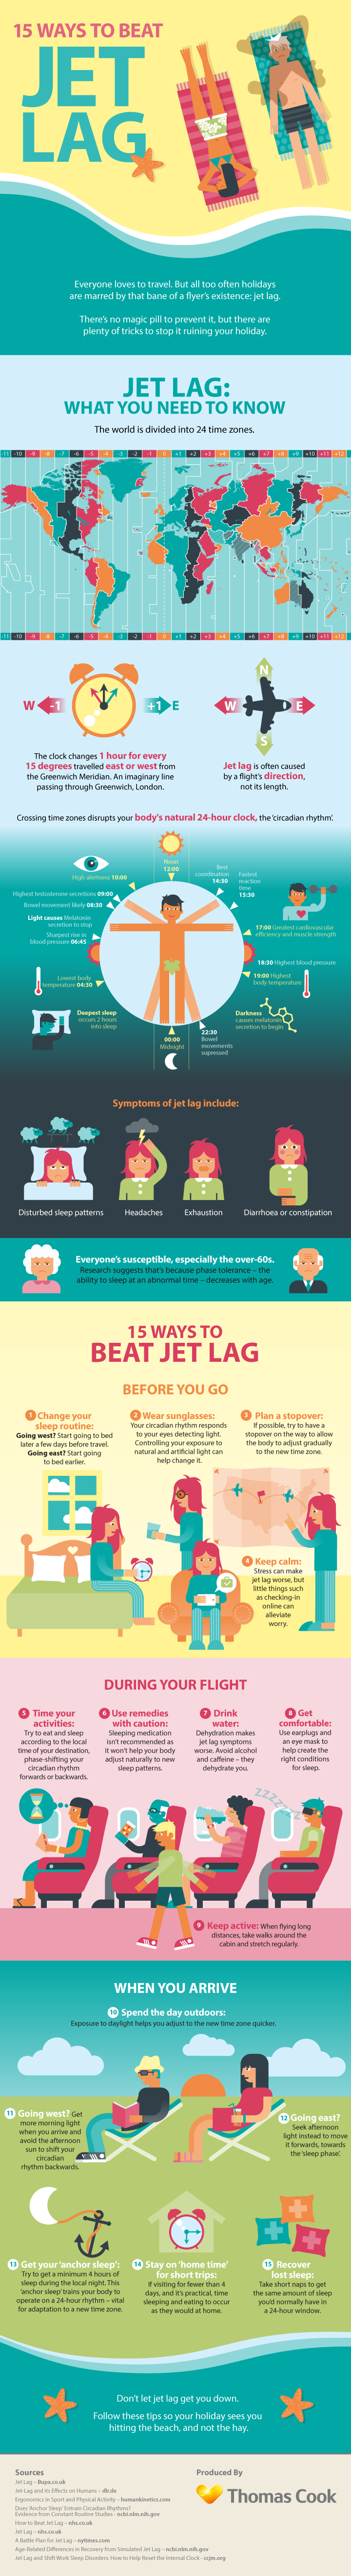 beat jet lag infographic